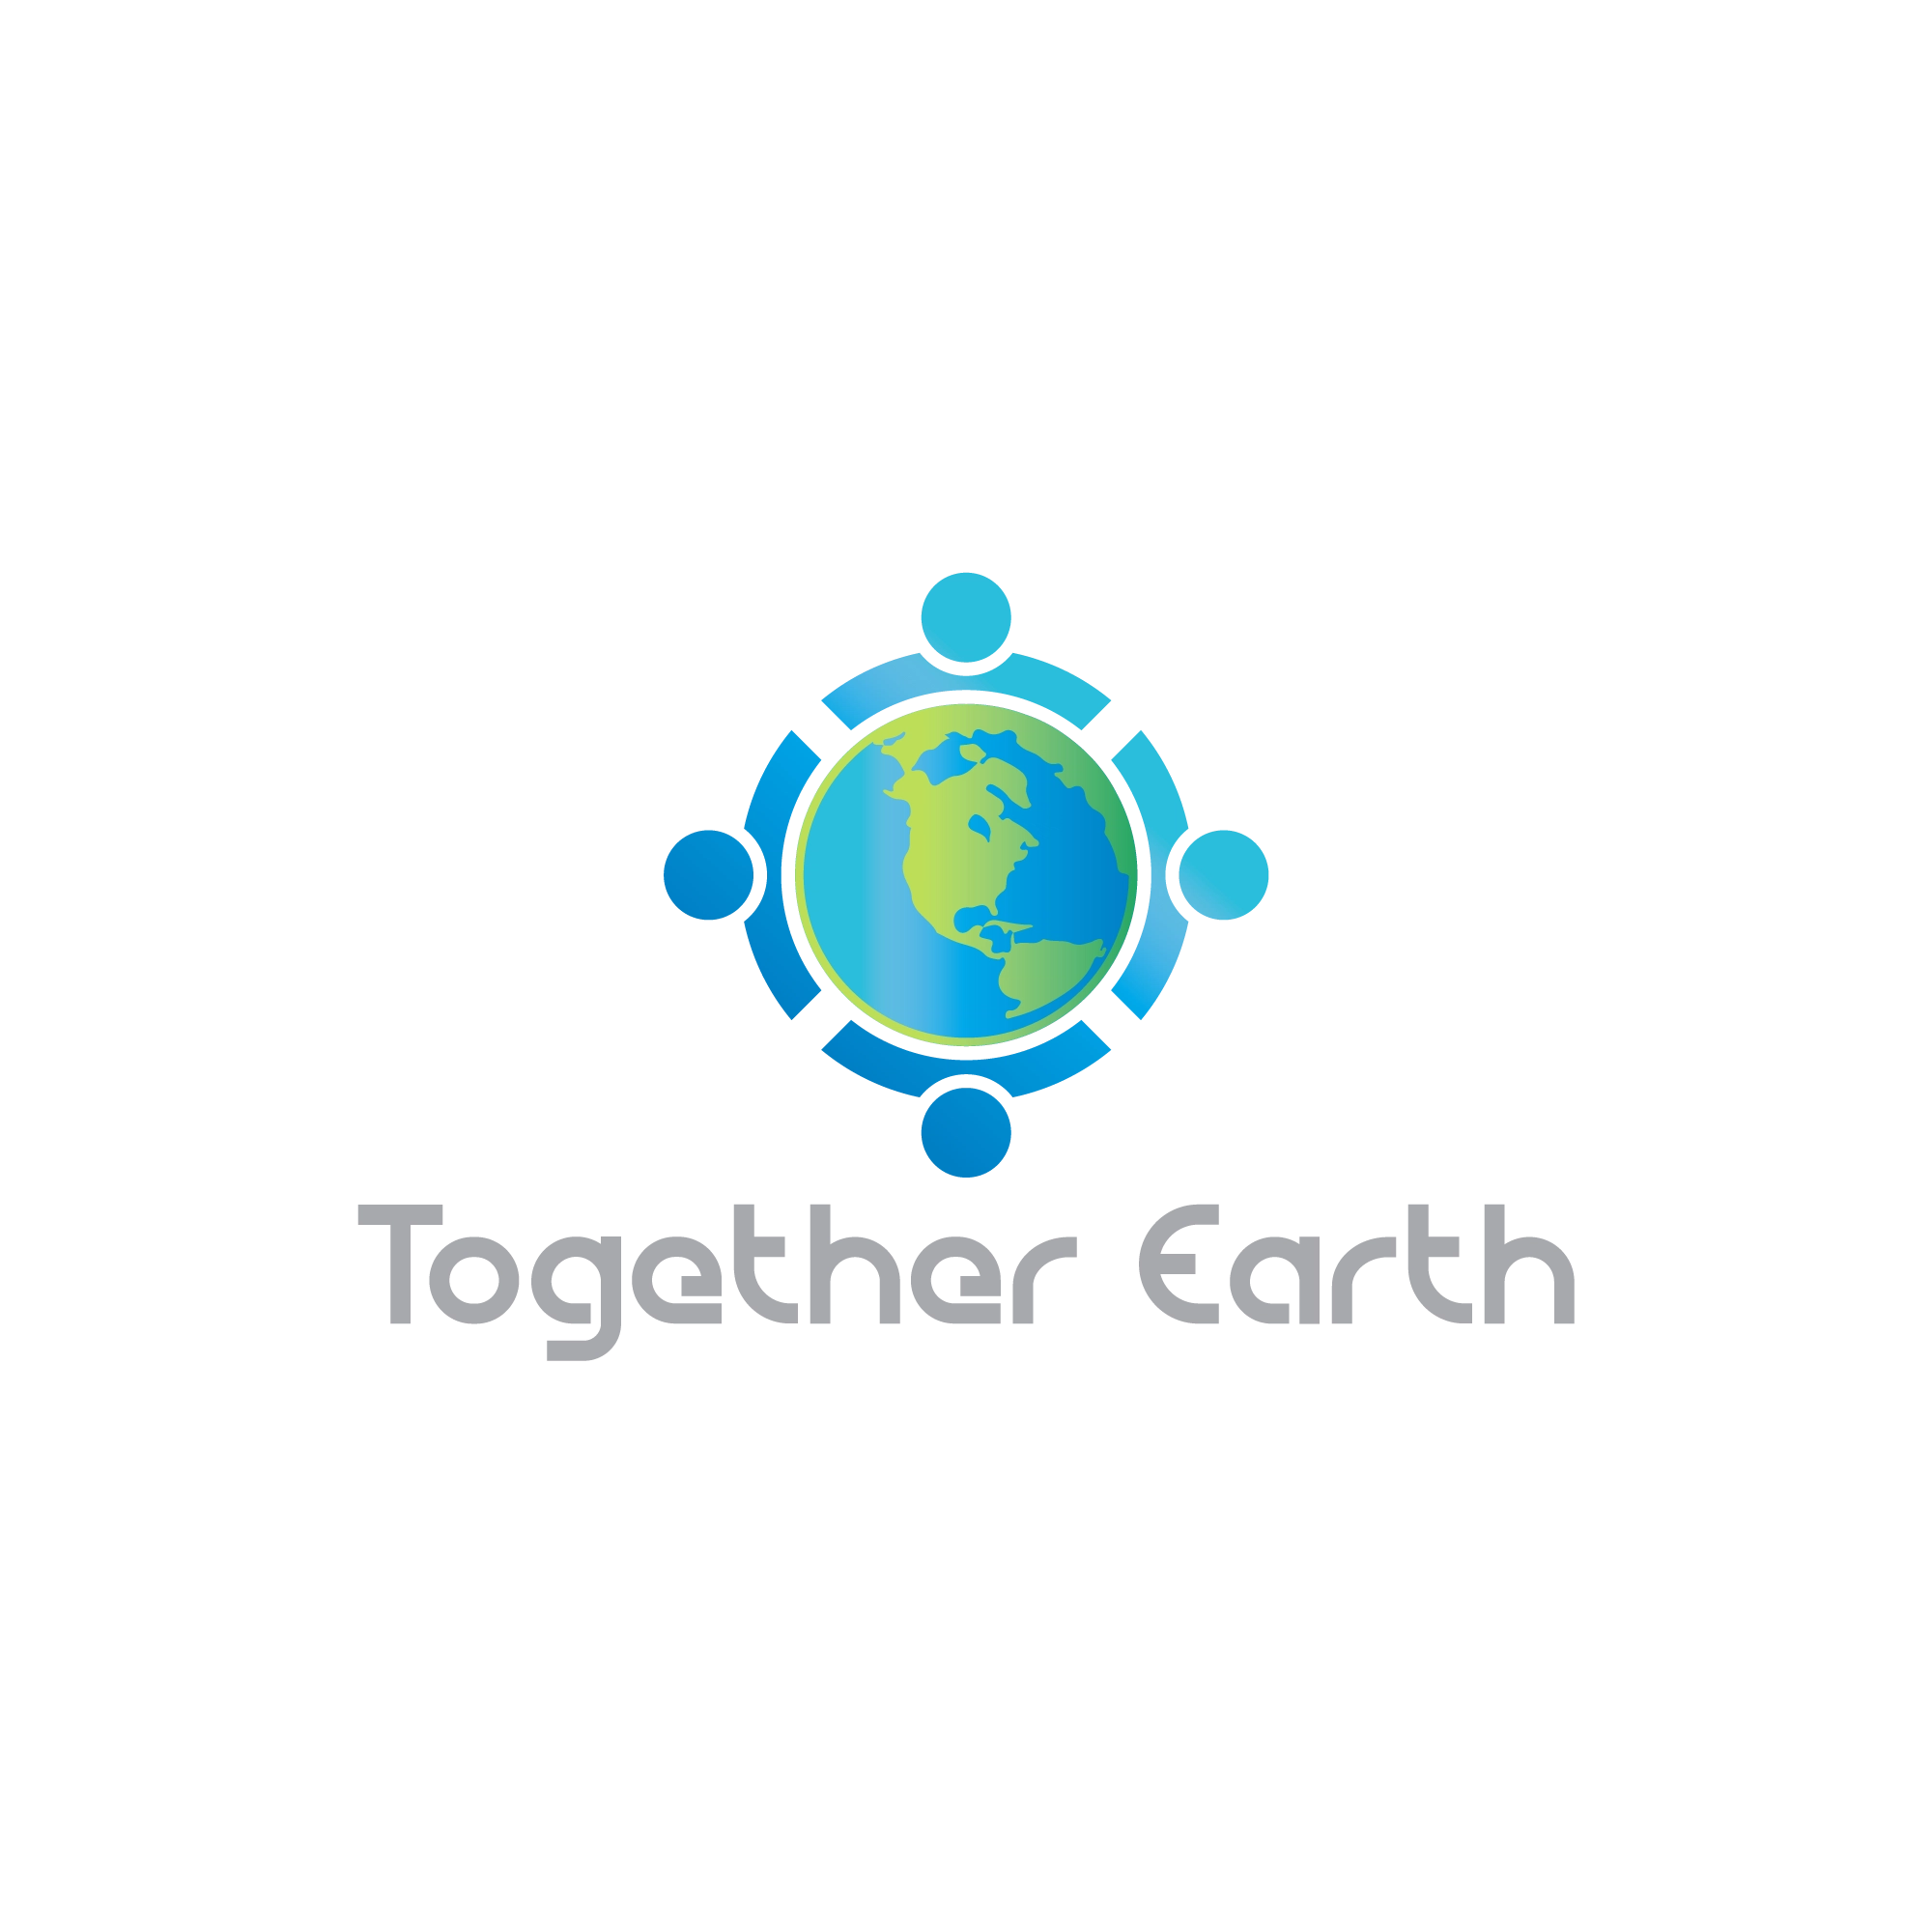 Together Earth Logo